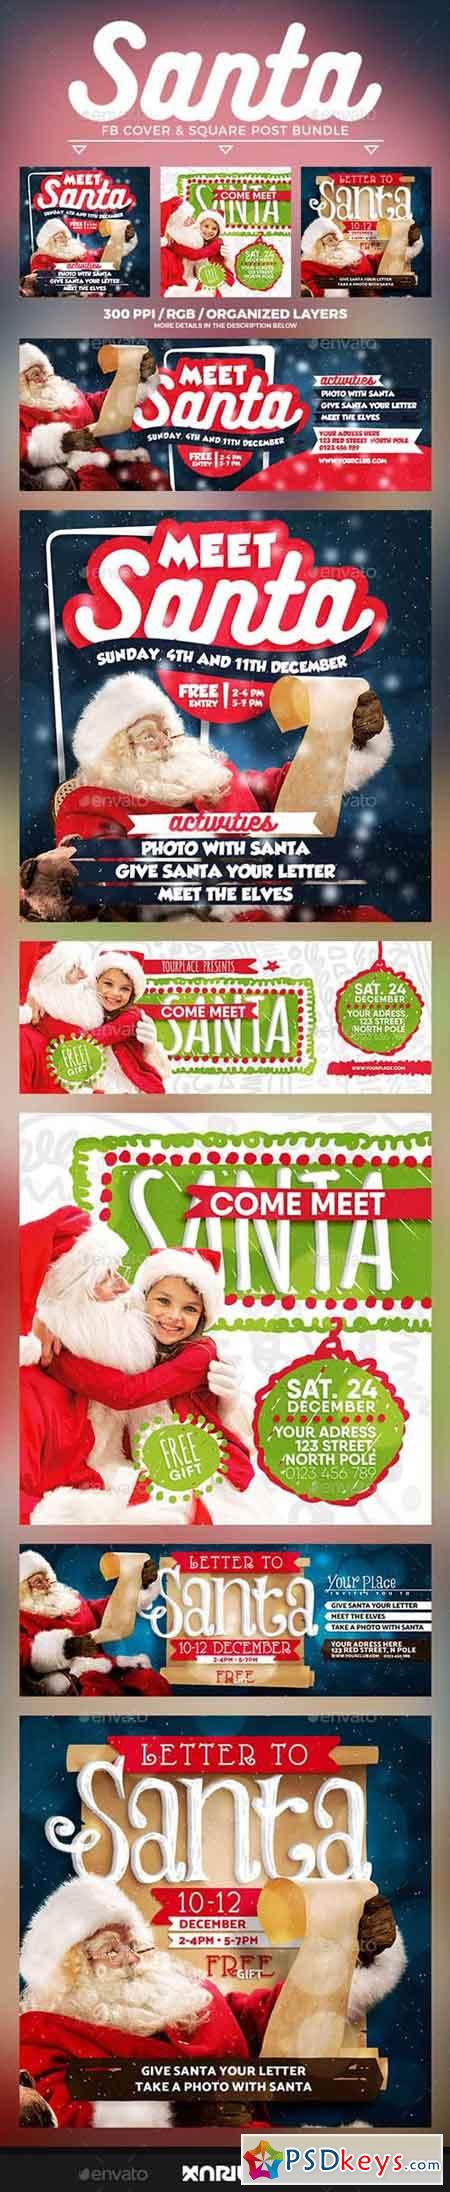 Meet Santa Facebook Cover Bundle 20954391